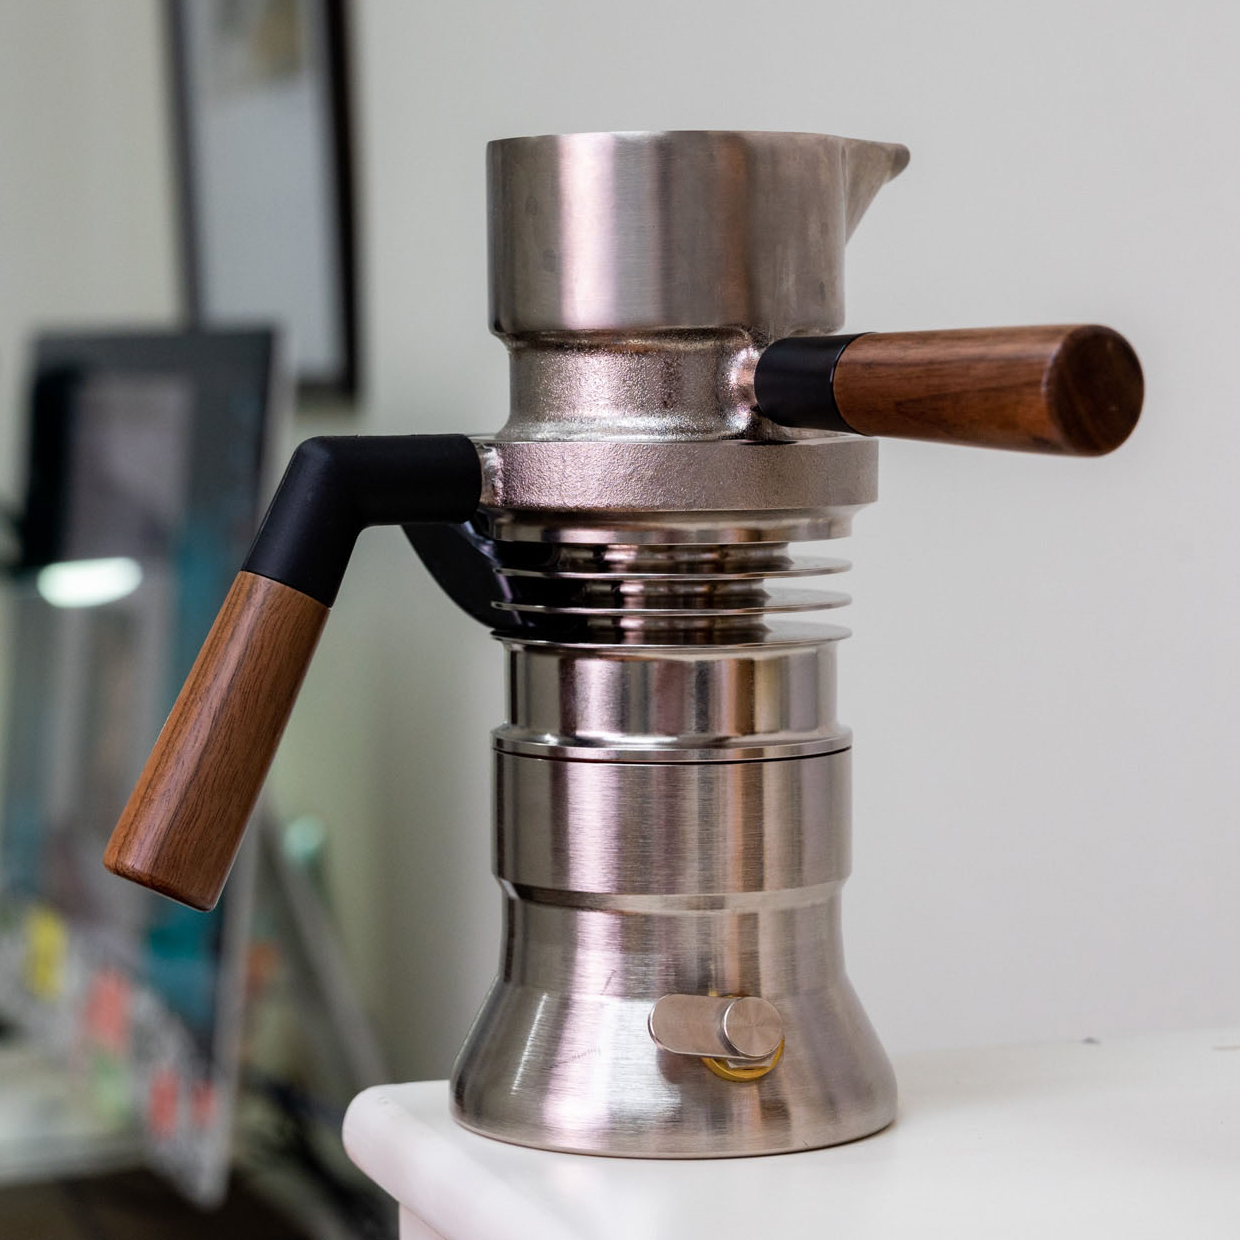 9Barista -Best Stovetop Espresso Maker